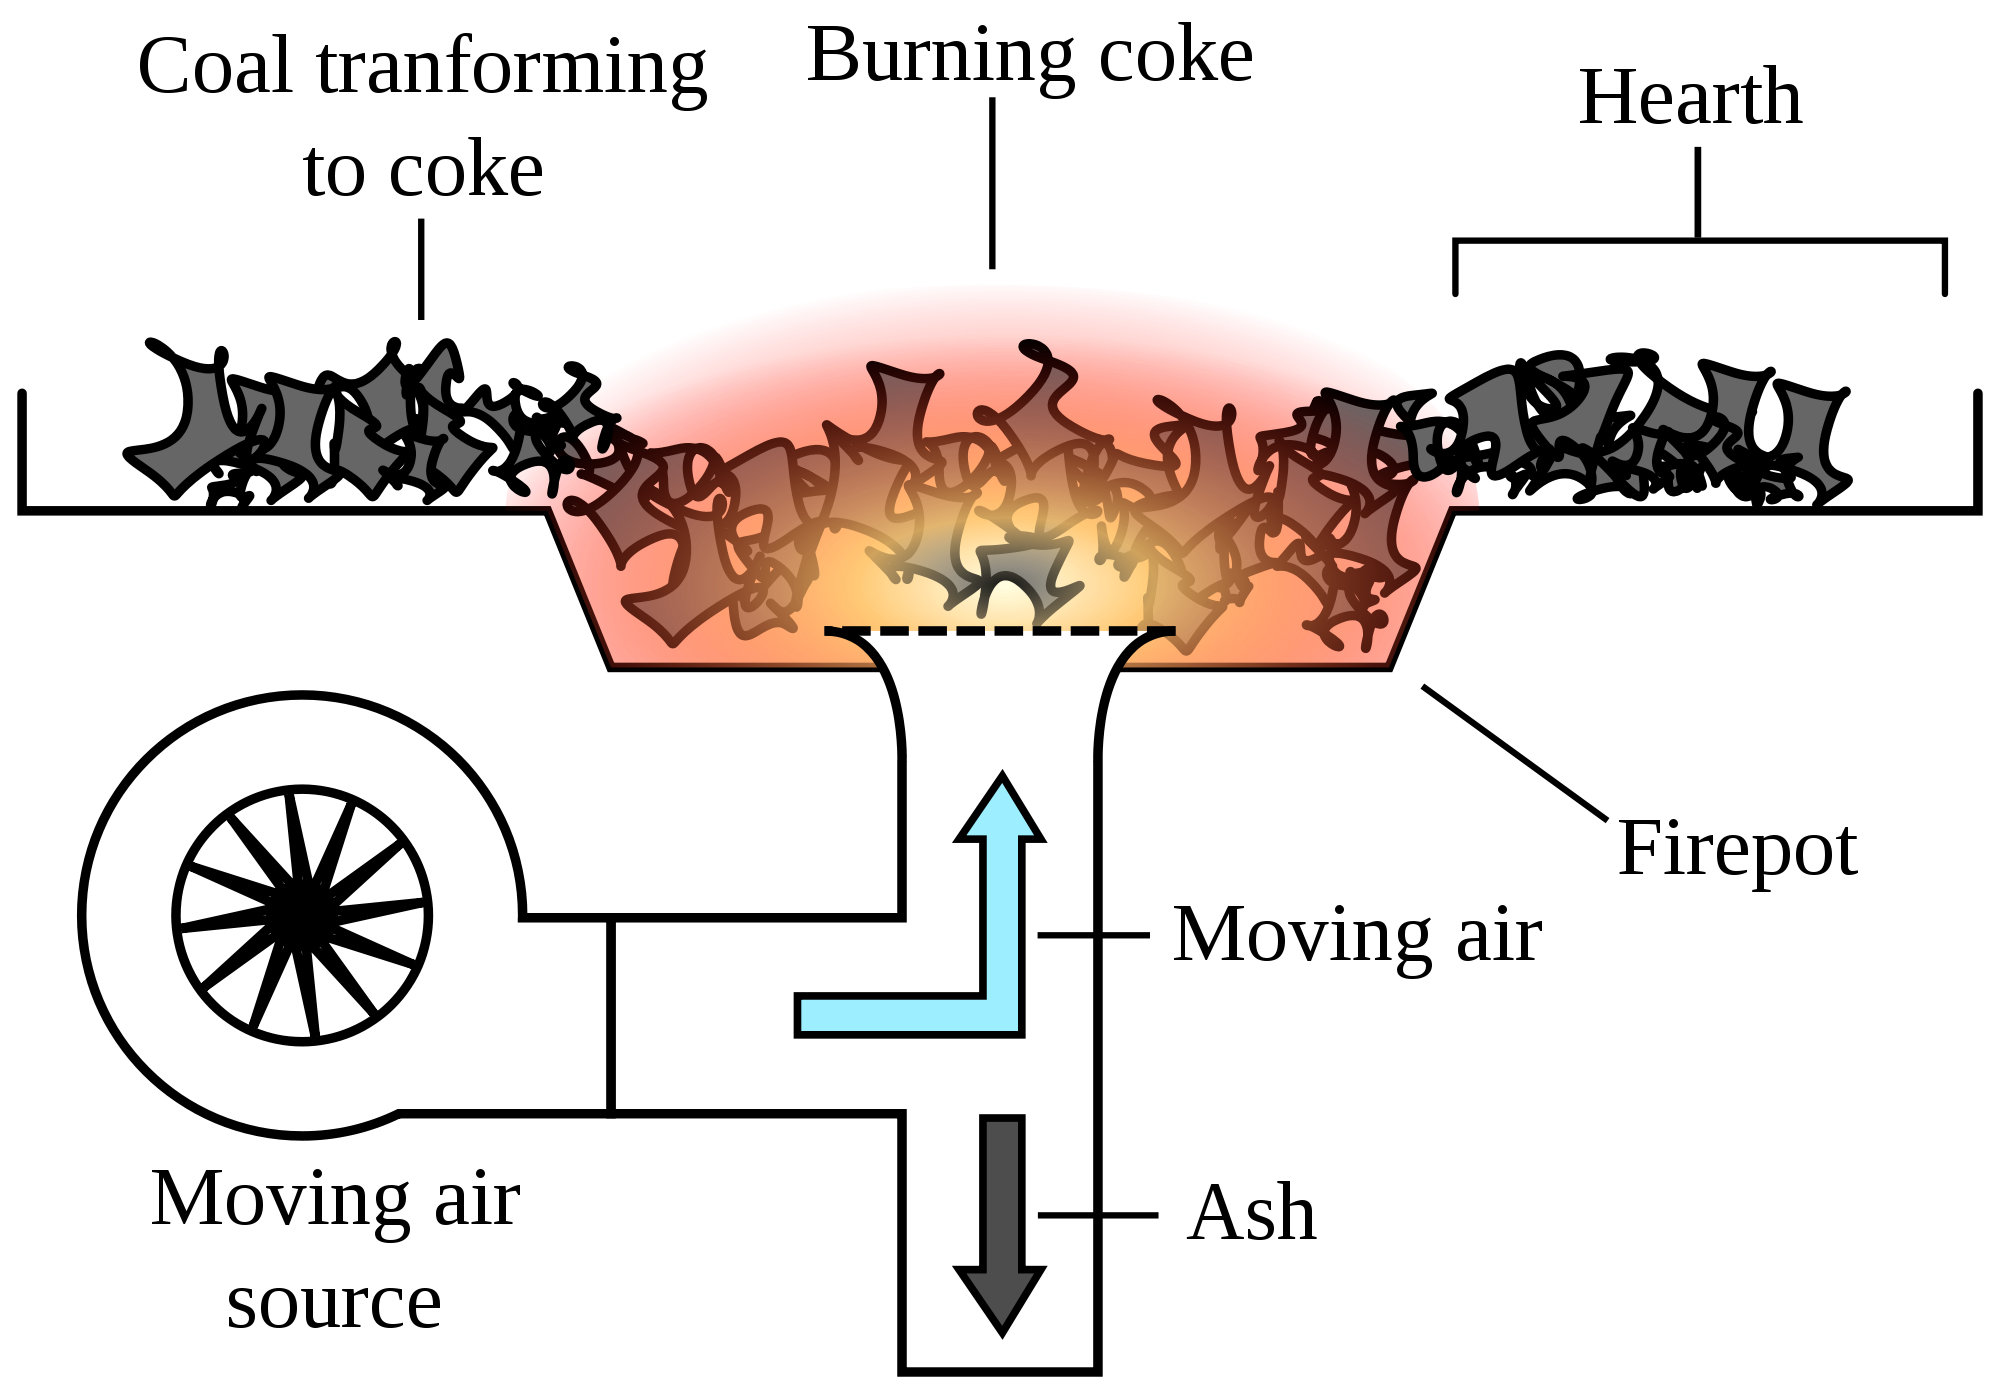 Forge à gaz - Forge Basic1 - 1 Brûleur Blacksmith - Blacksmith